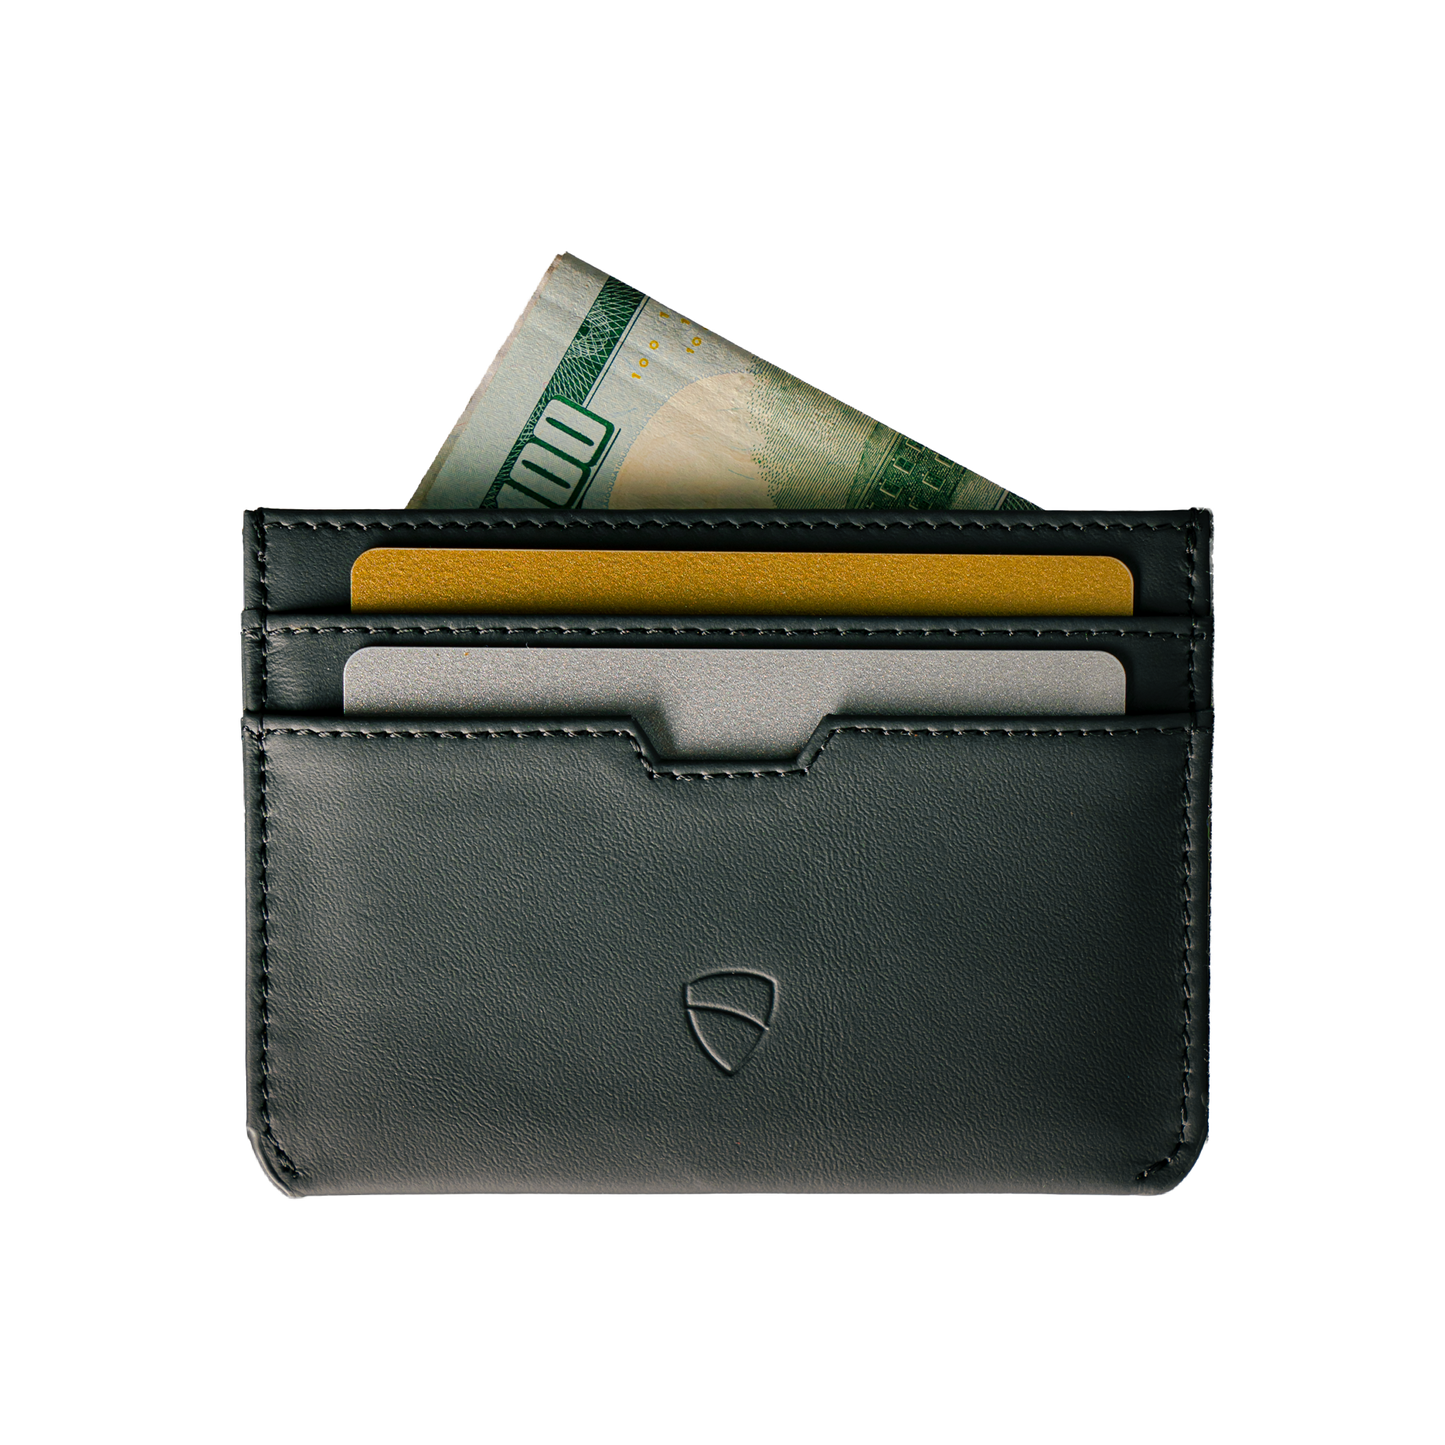 Classic minimalist design leather card wallet